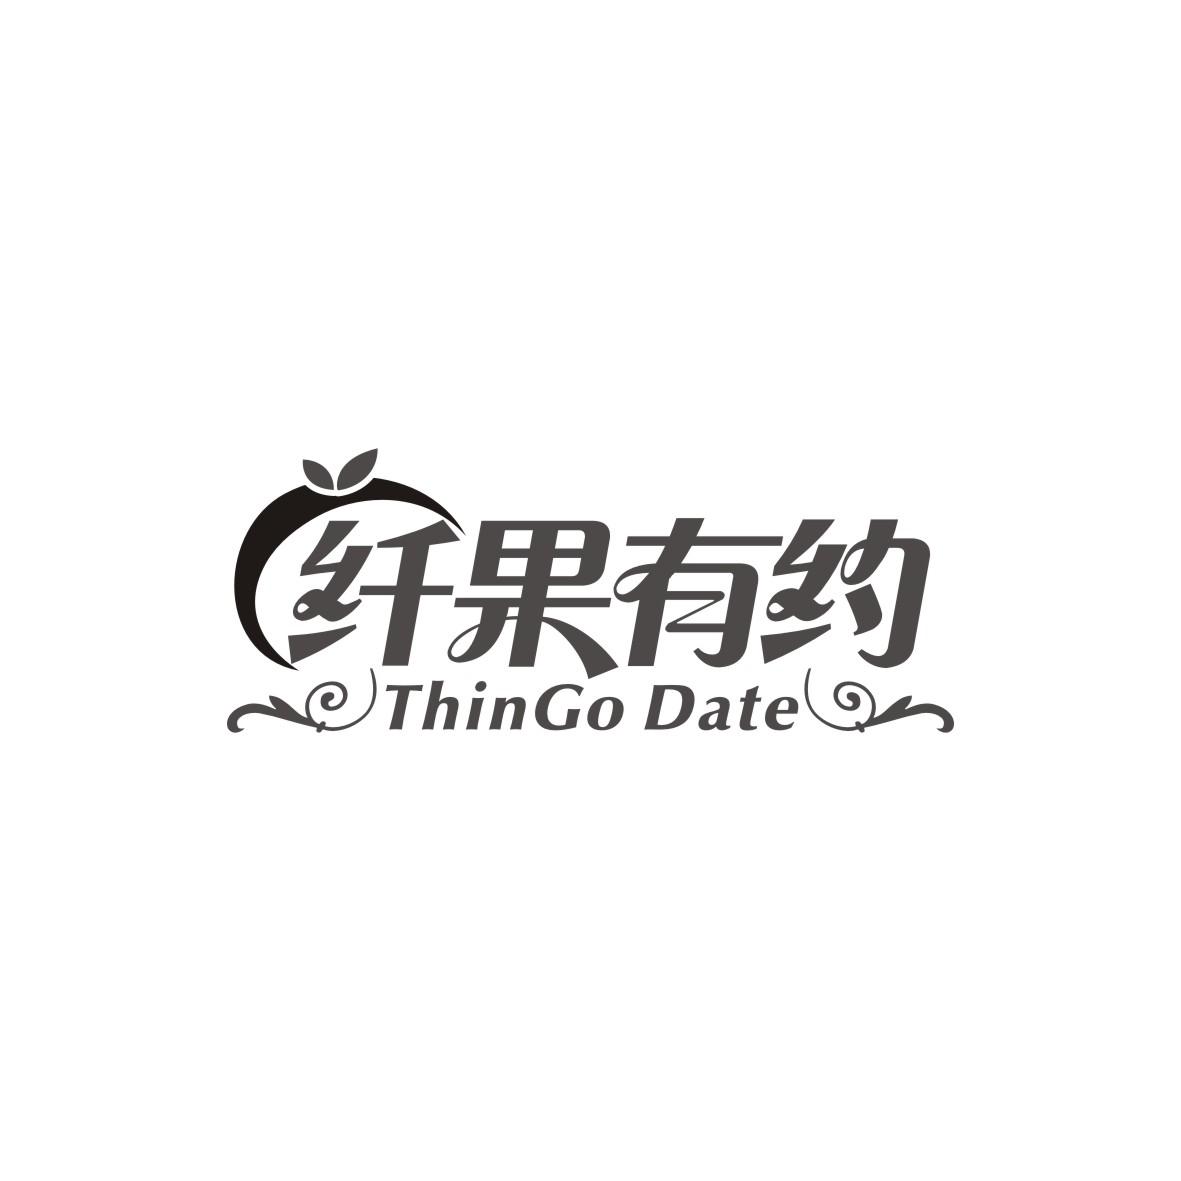 ˹ԼTHINGO DATE